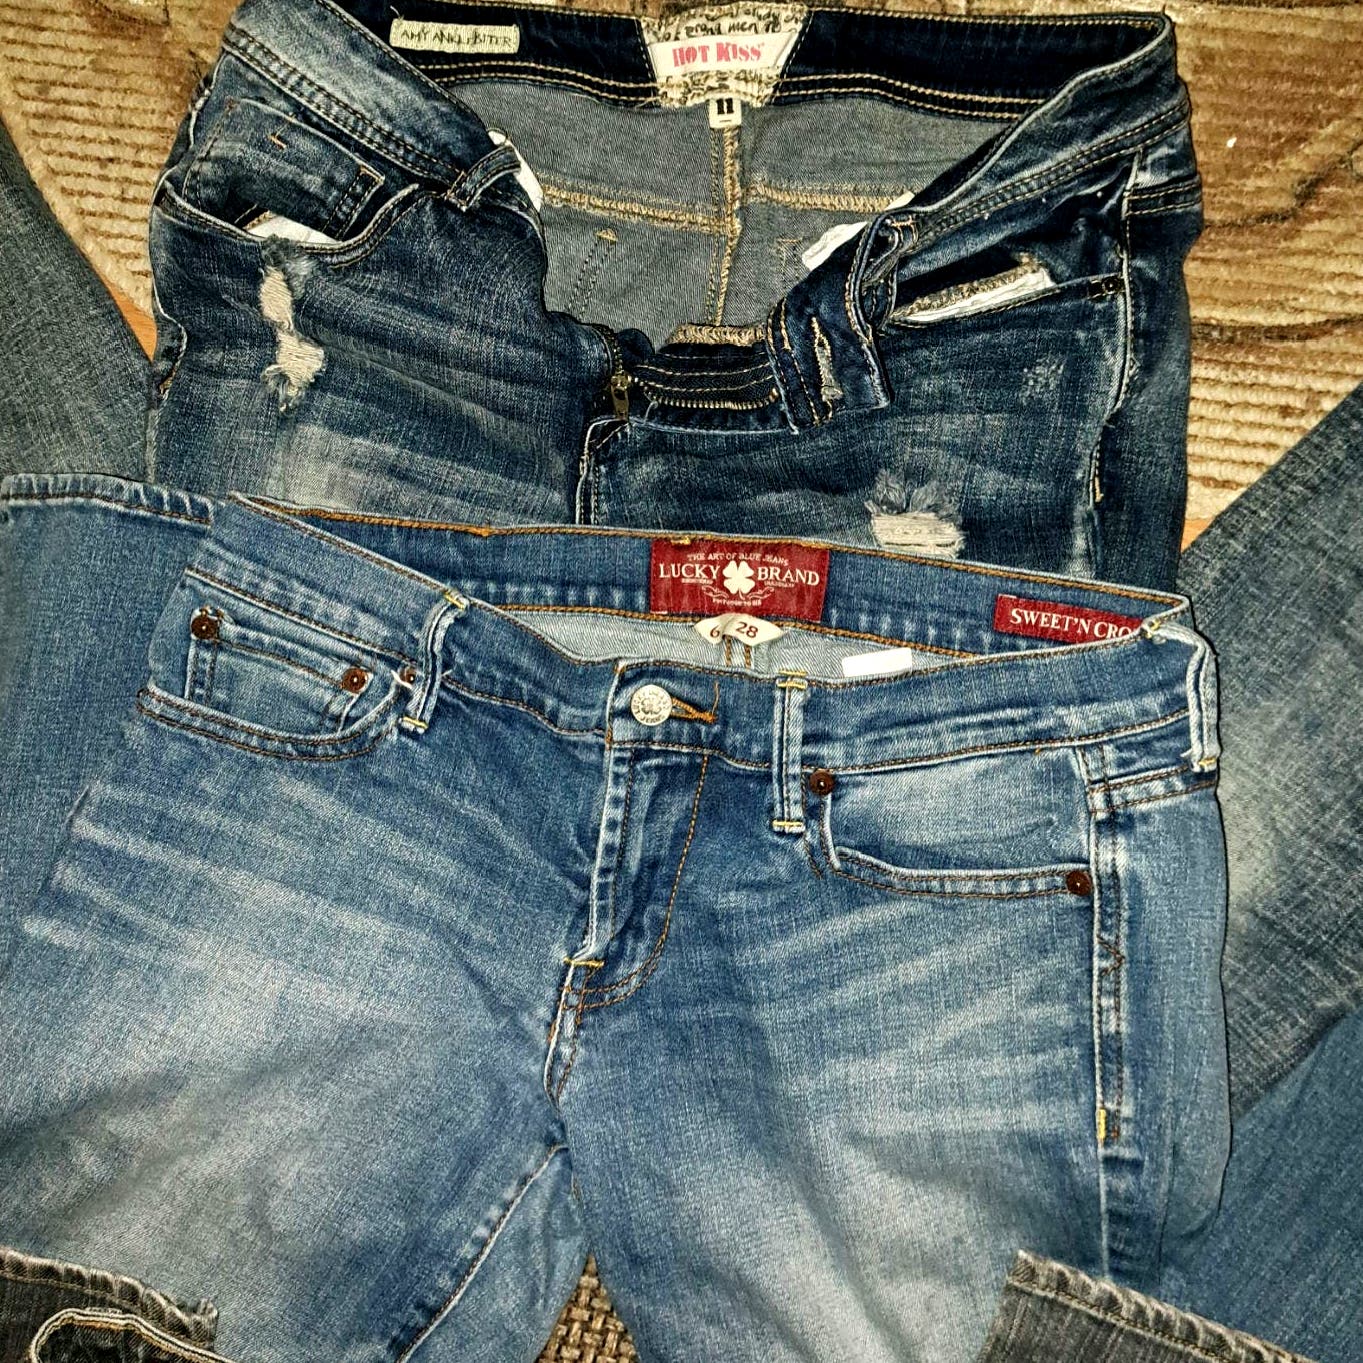 Fabulous Fun Bundle of 6 Size 6 Jeans! Talbots-Lucky Brand-Hot Kiss-Gap